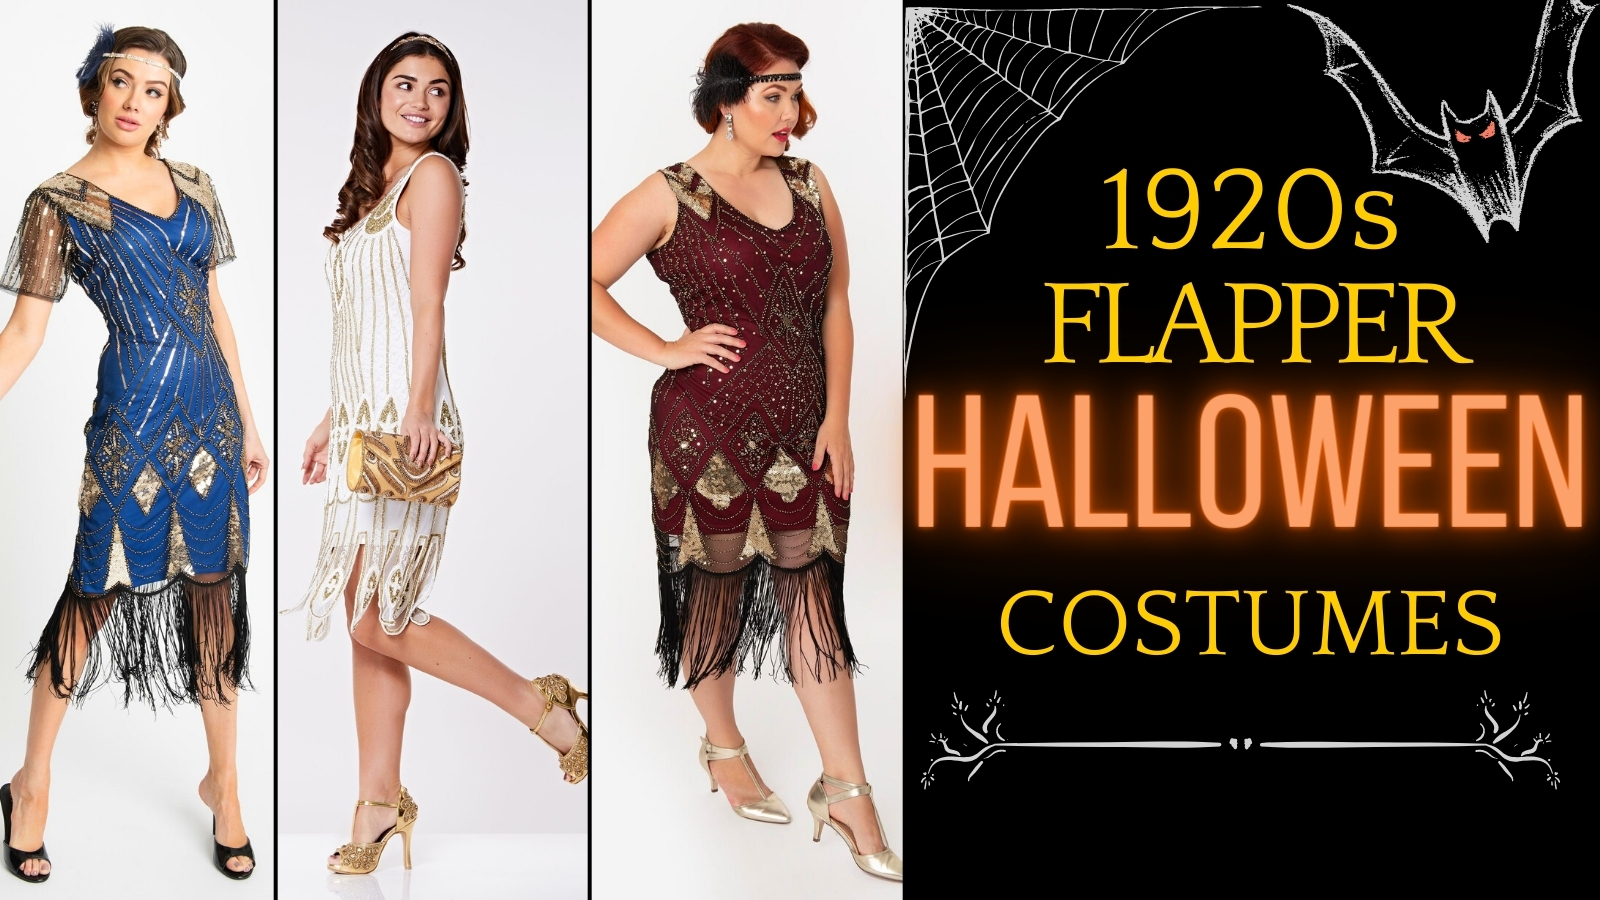 Flapper Costumes Halloween